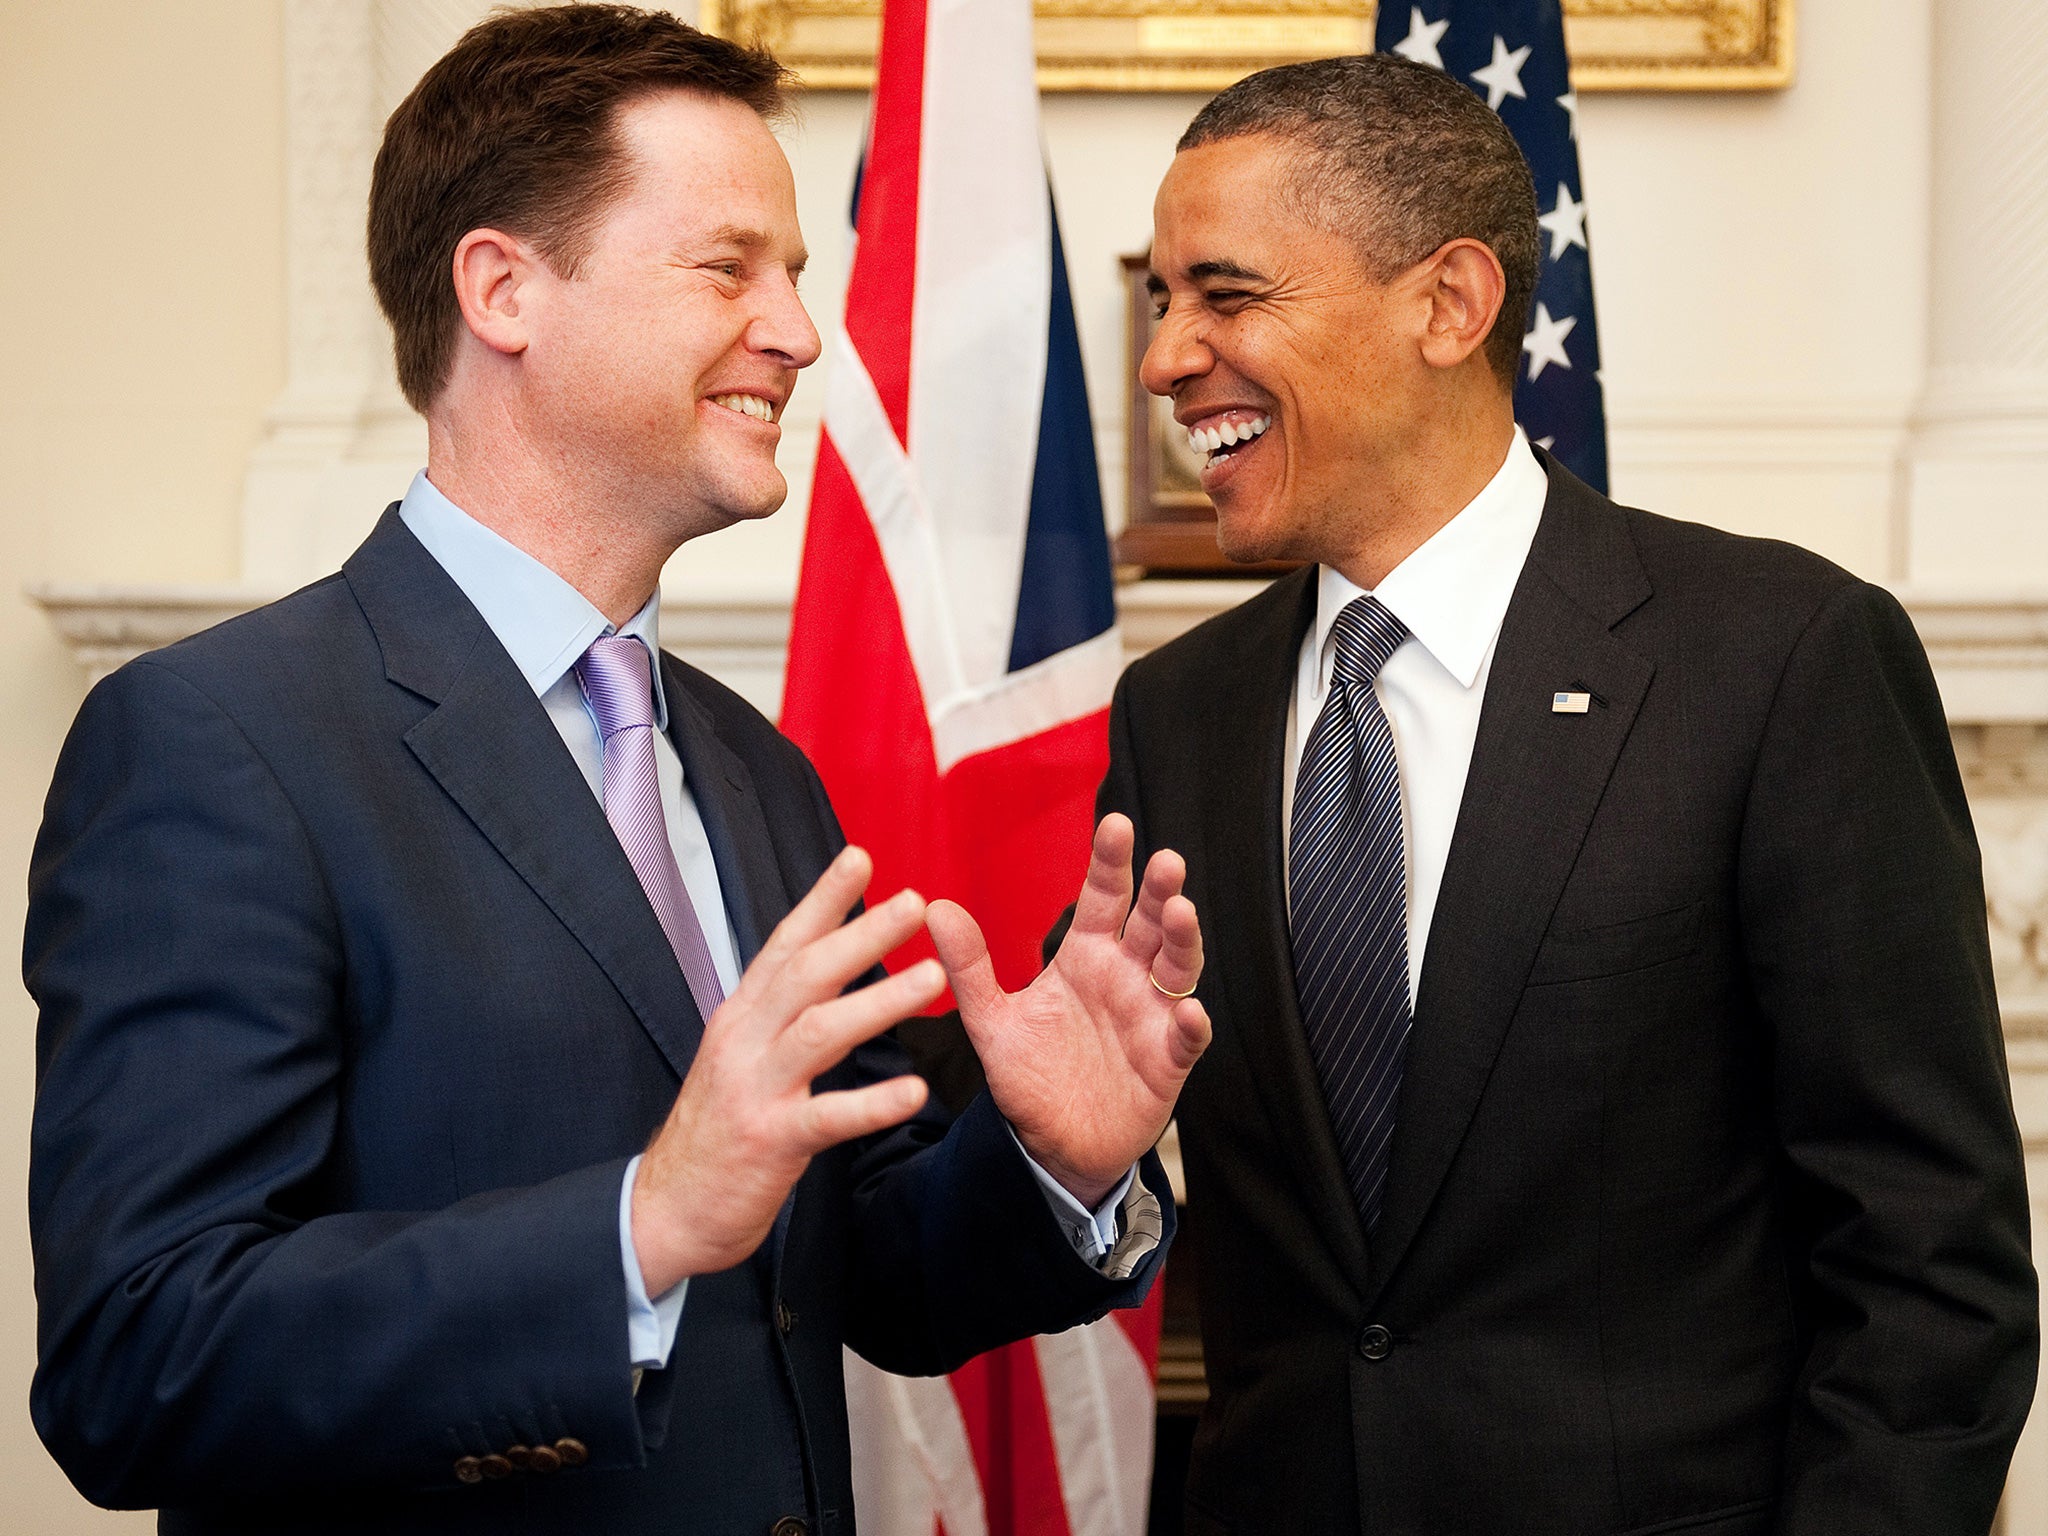 Nick Clegg and President Obama sharing a joke together in 2011